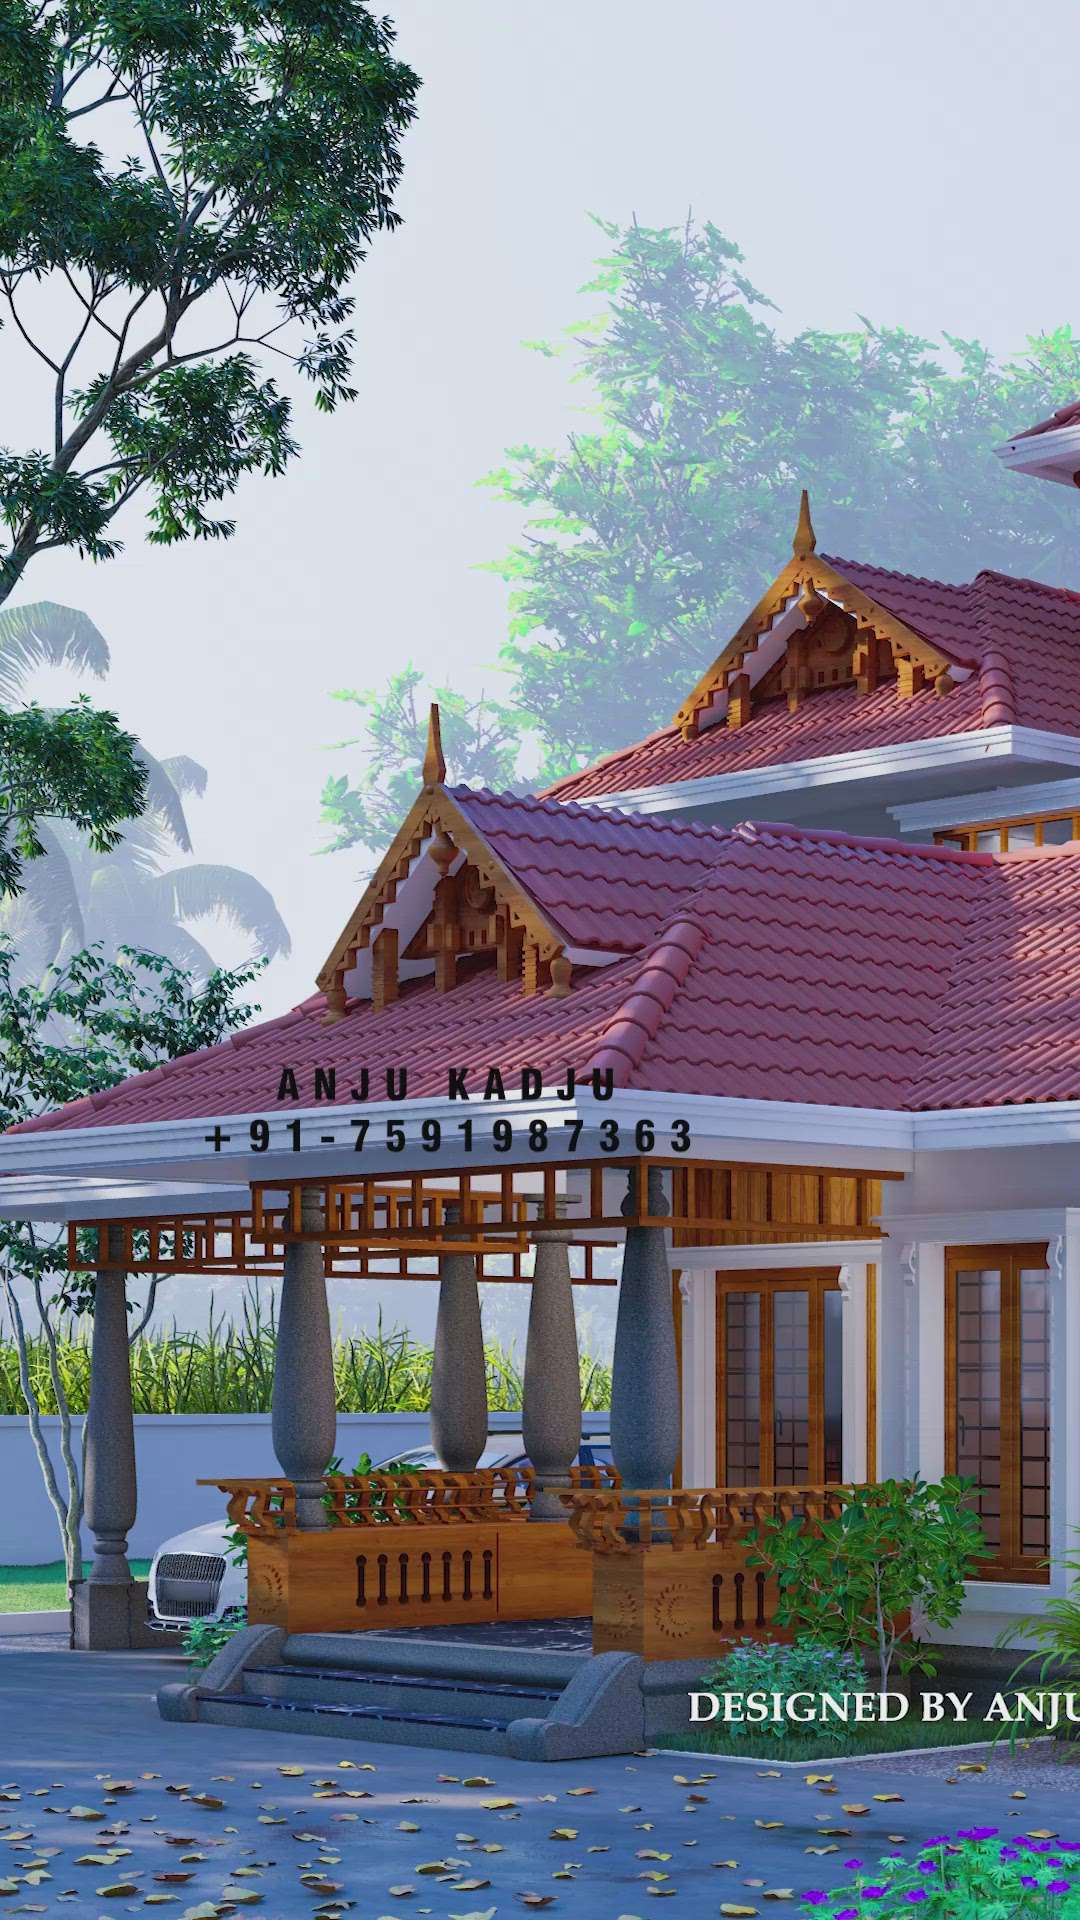 Traditional House Design kerala architecture.
designed by anju kadju
+91.759*1987*363 #TraditionalHouse #best3ddesinger #3ddesigns #KeralaStyleHouse #50LakhHouse #2900sqfthouse